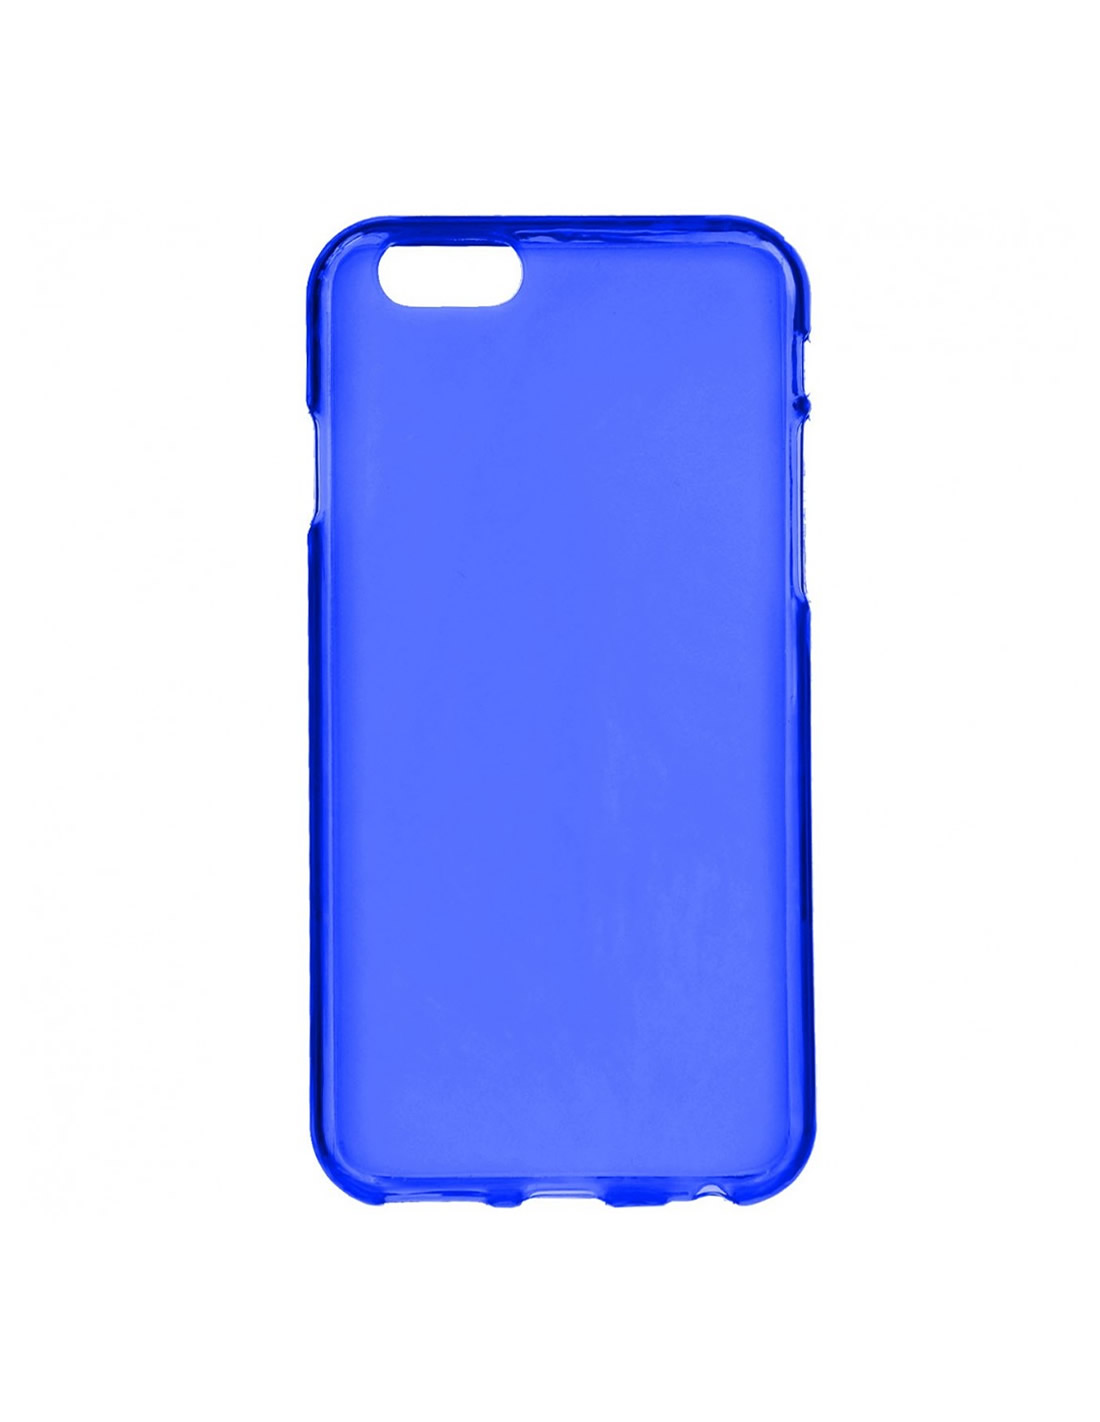 Funda Carcasa azul silicona iPhone 5/ 5S /